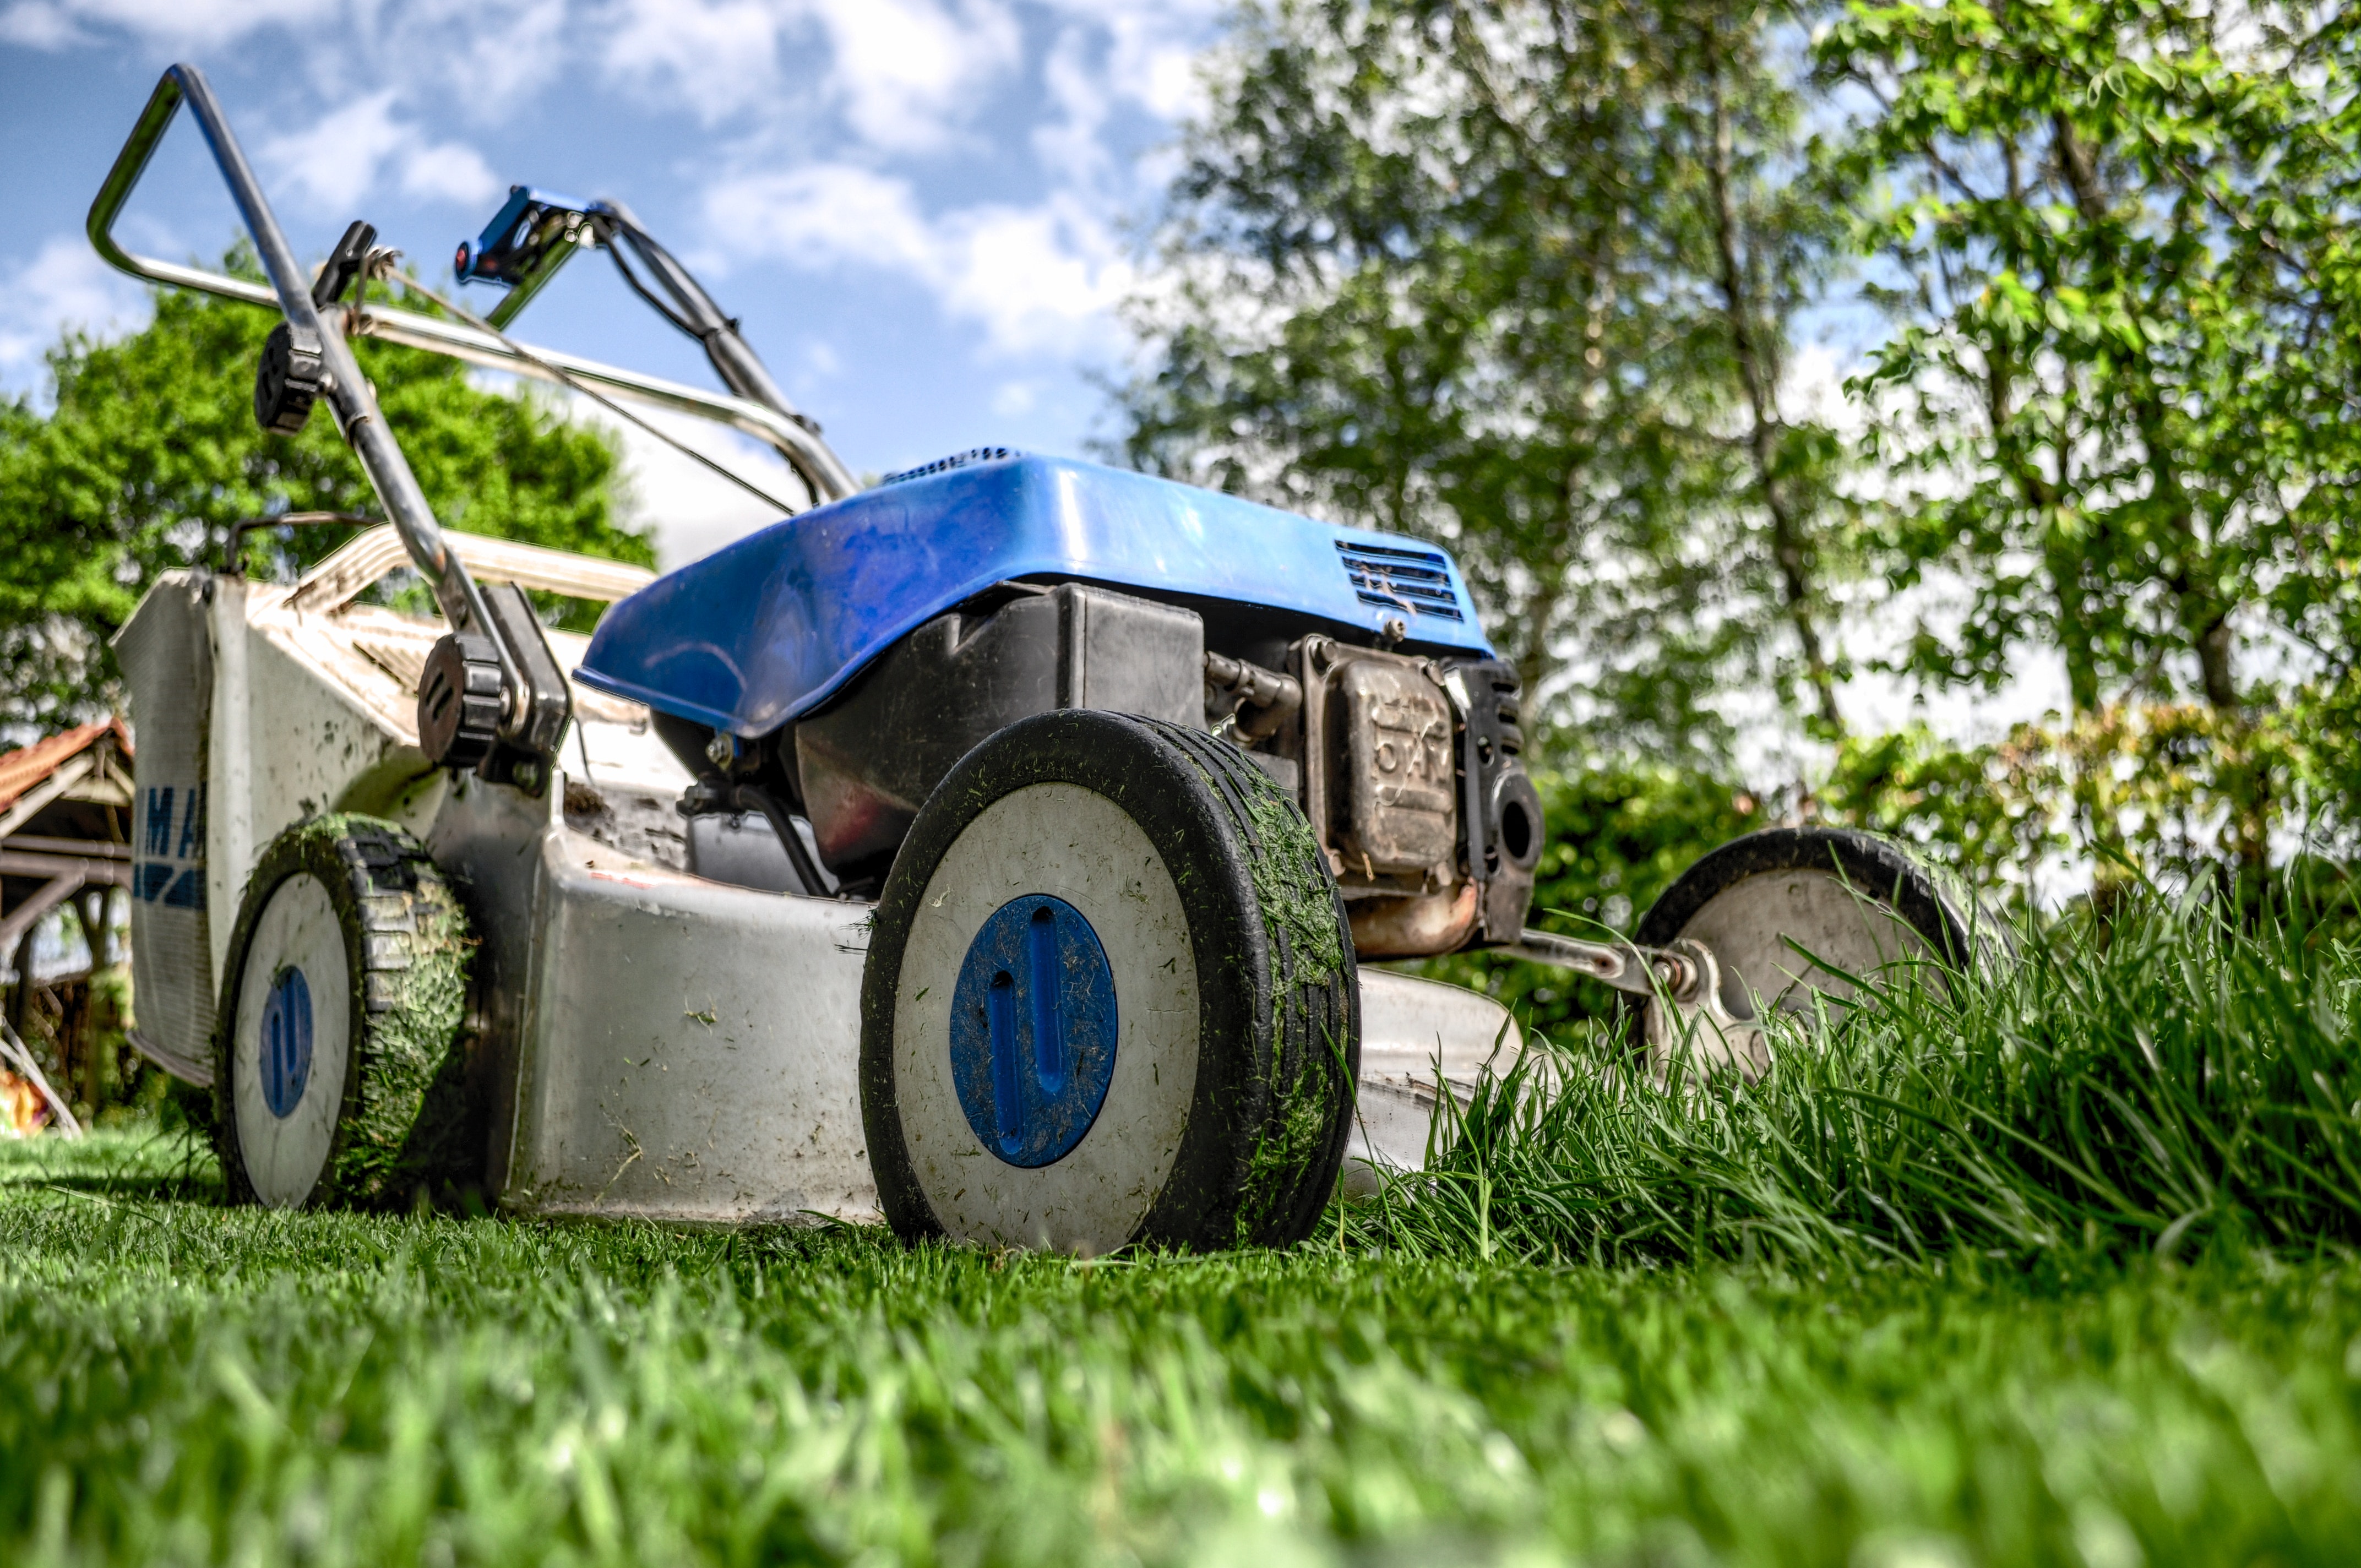 Making Safety a Regular Part of Lawn Maintenance by Mario Villarino